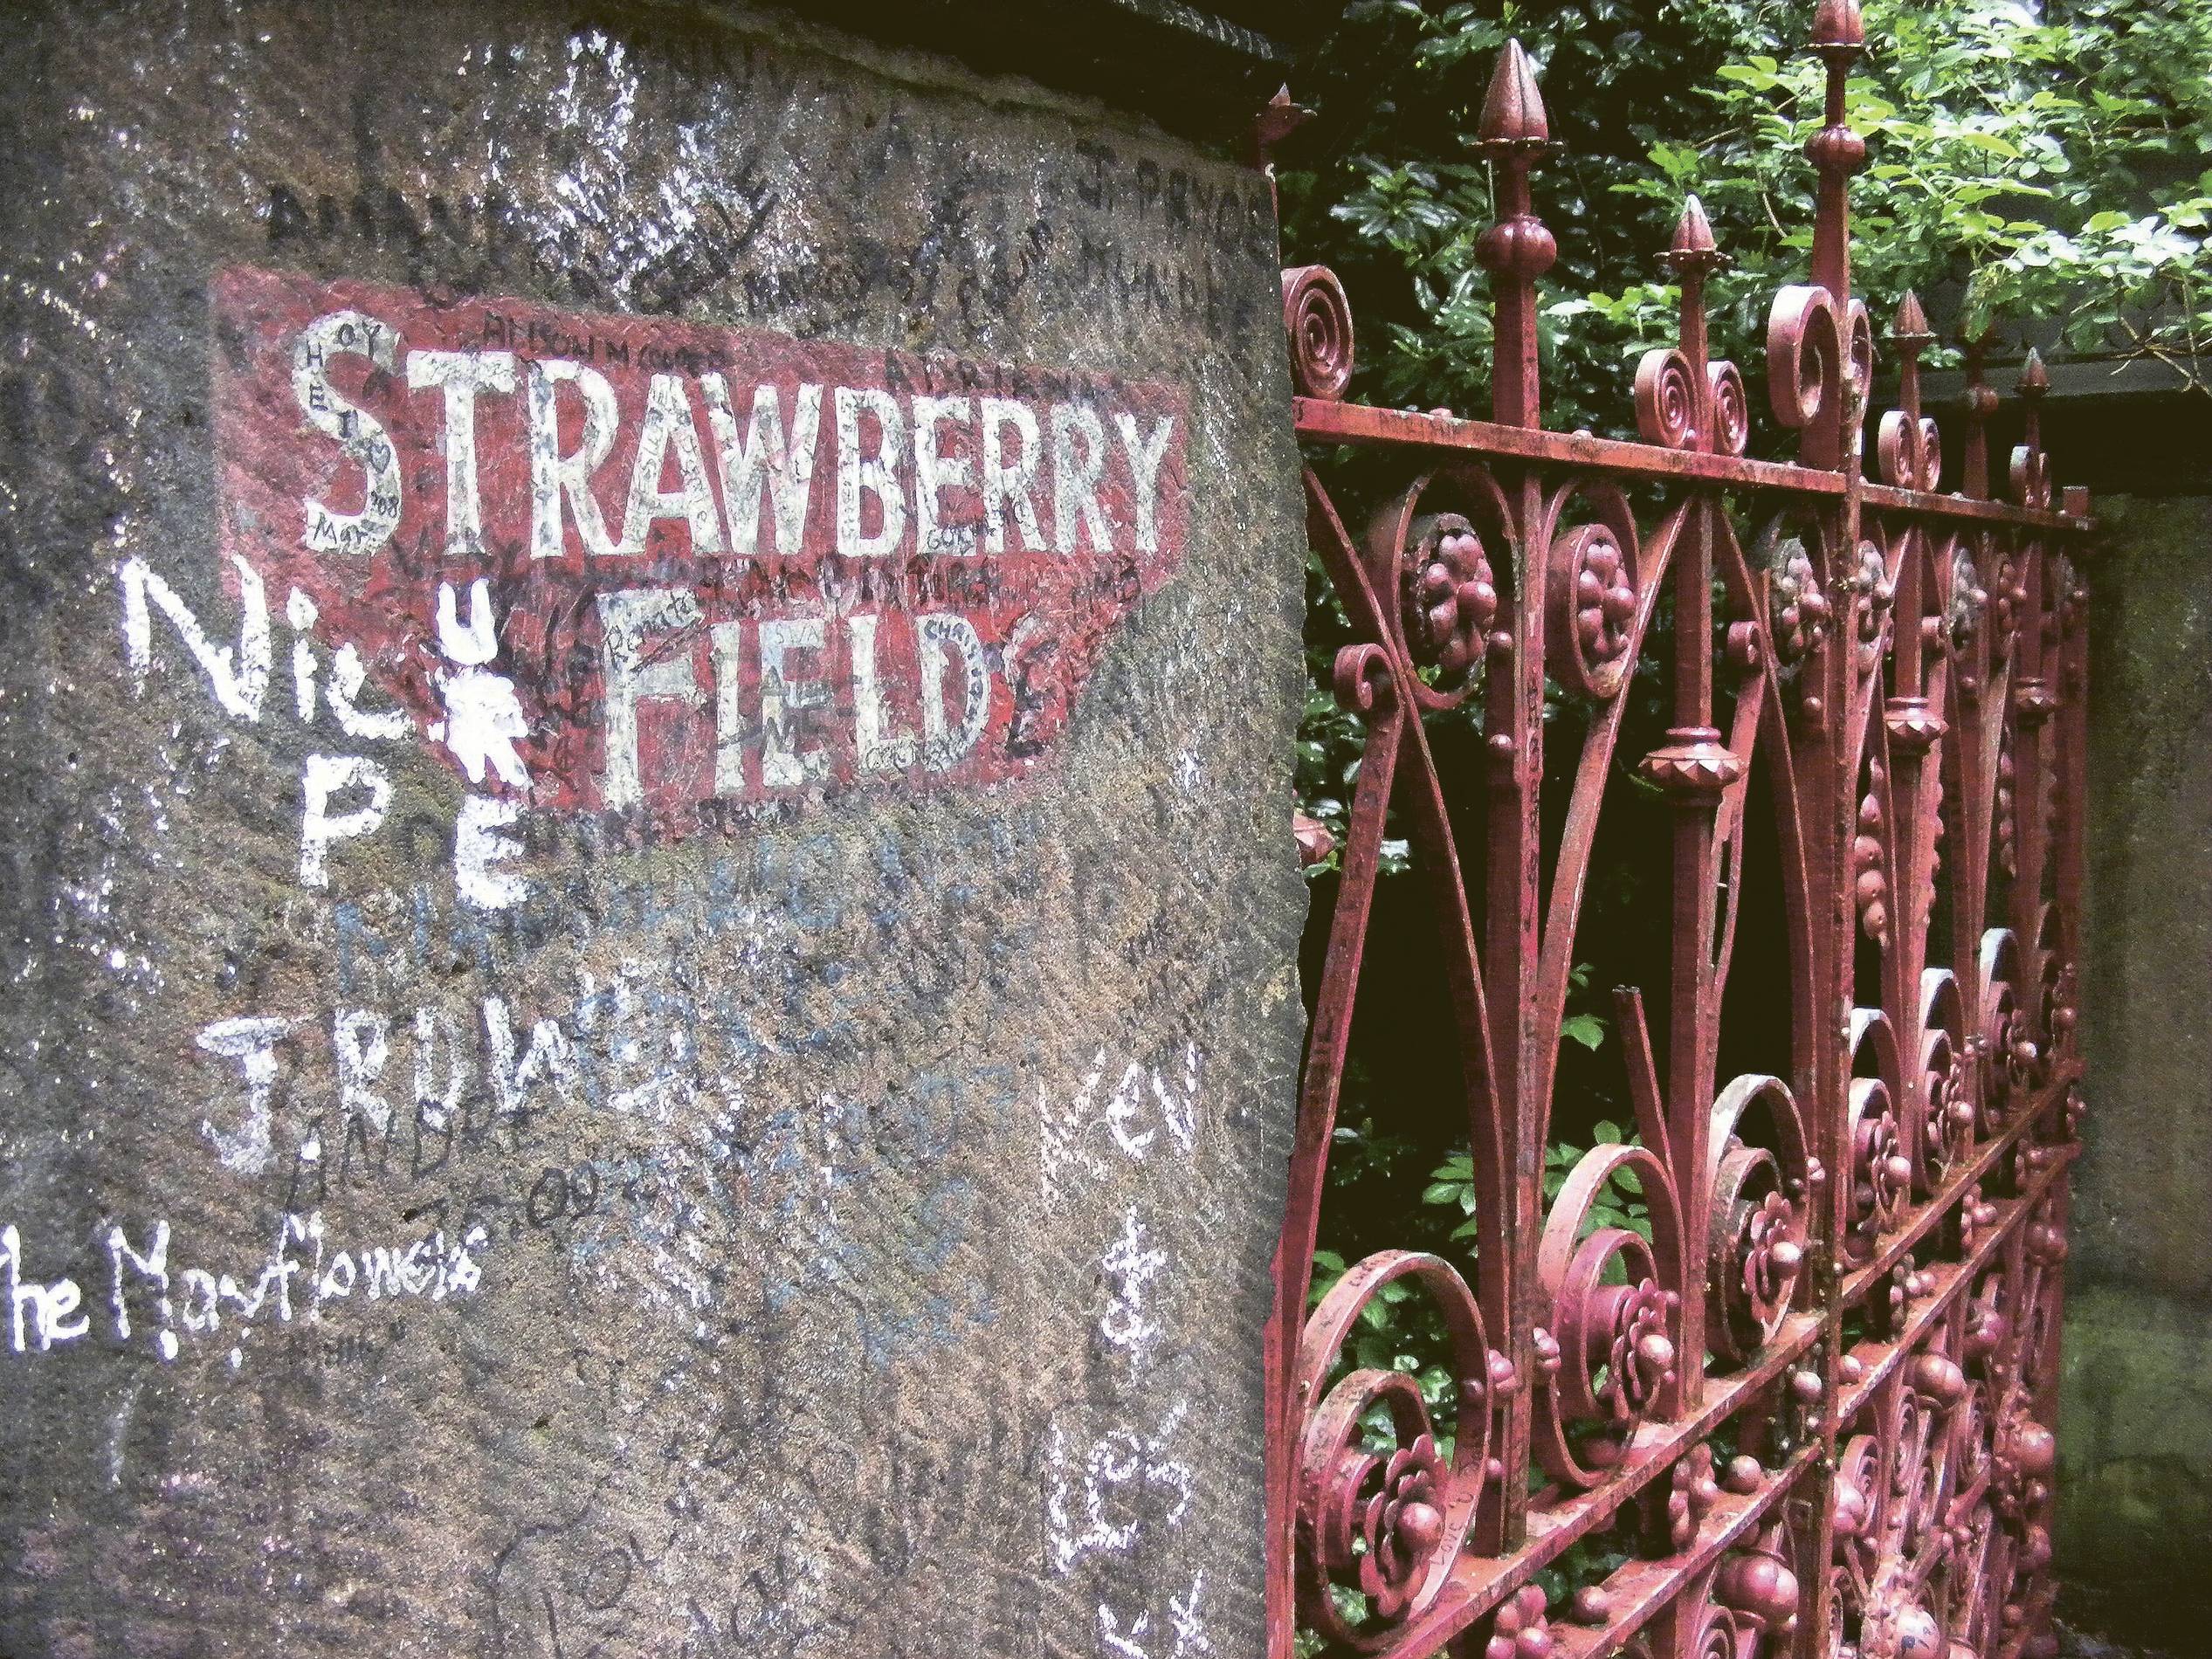 the gates of Strawberry Fields